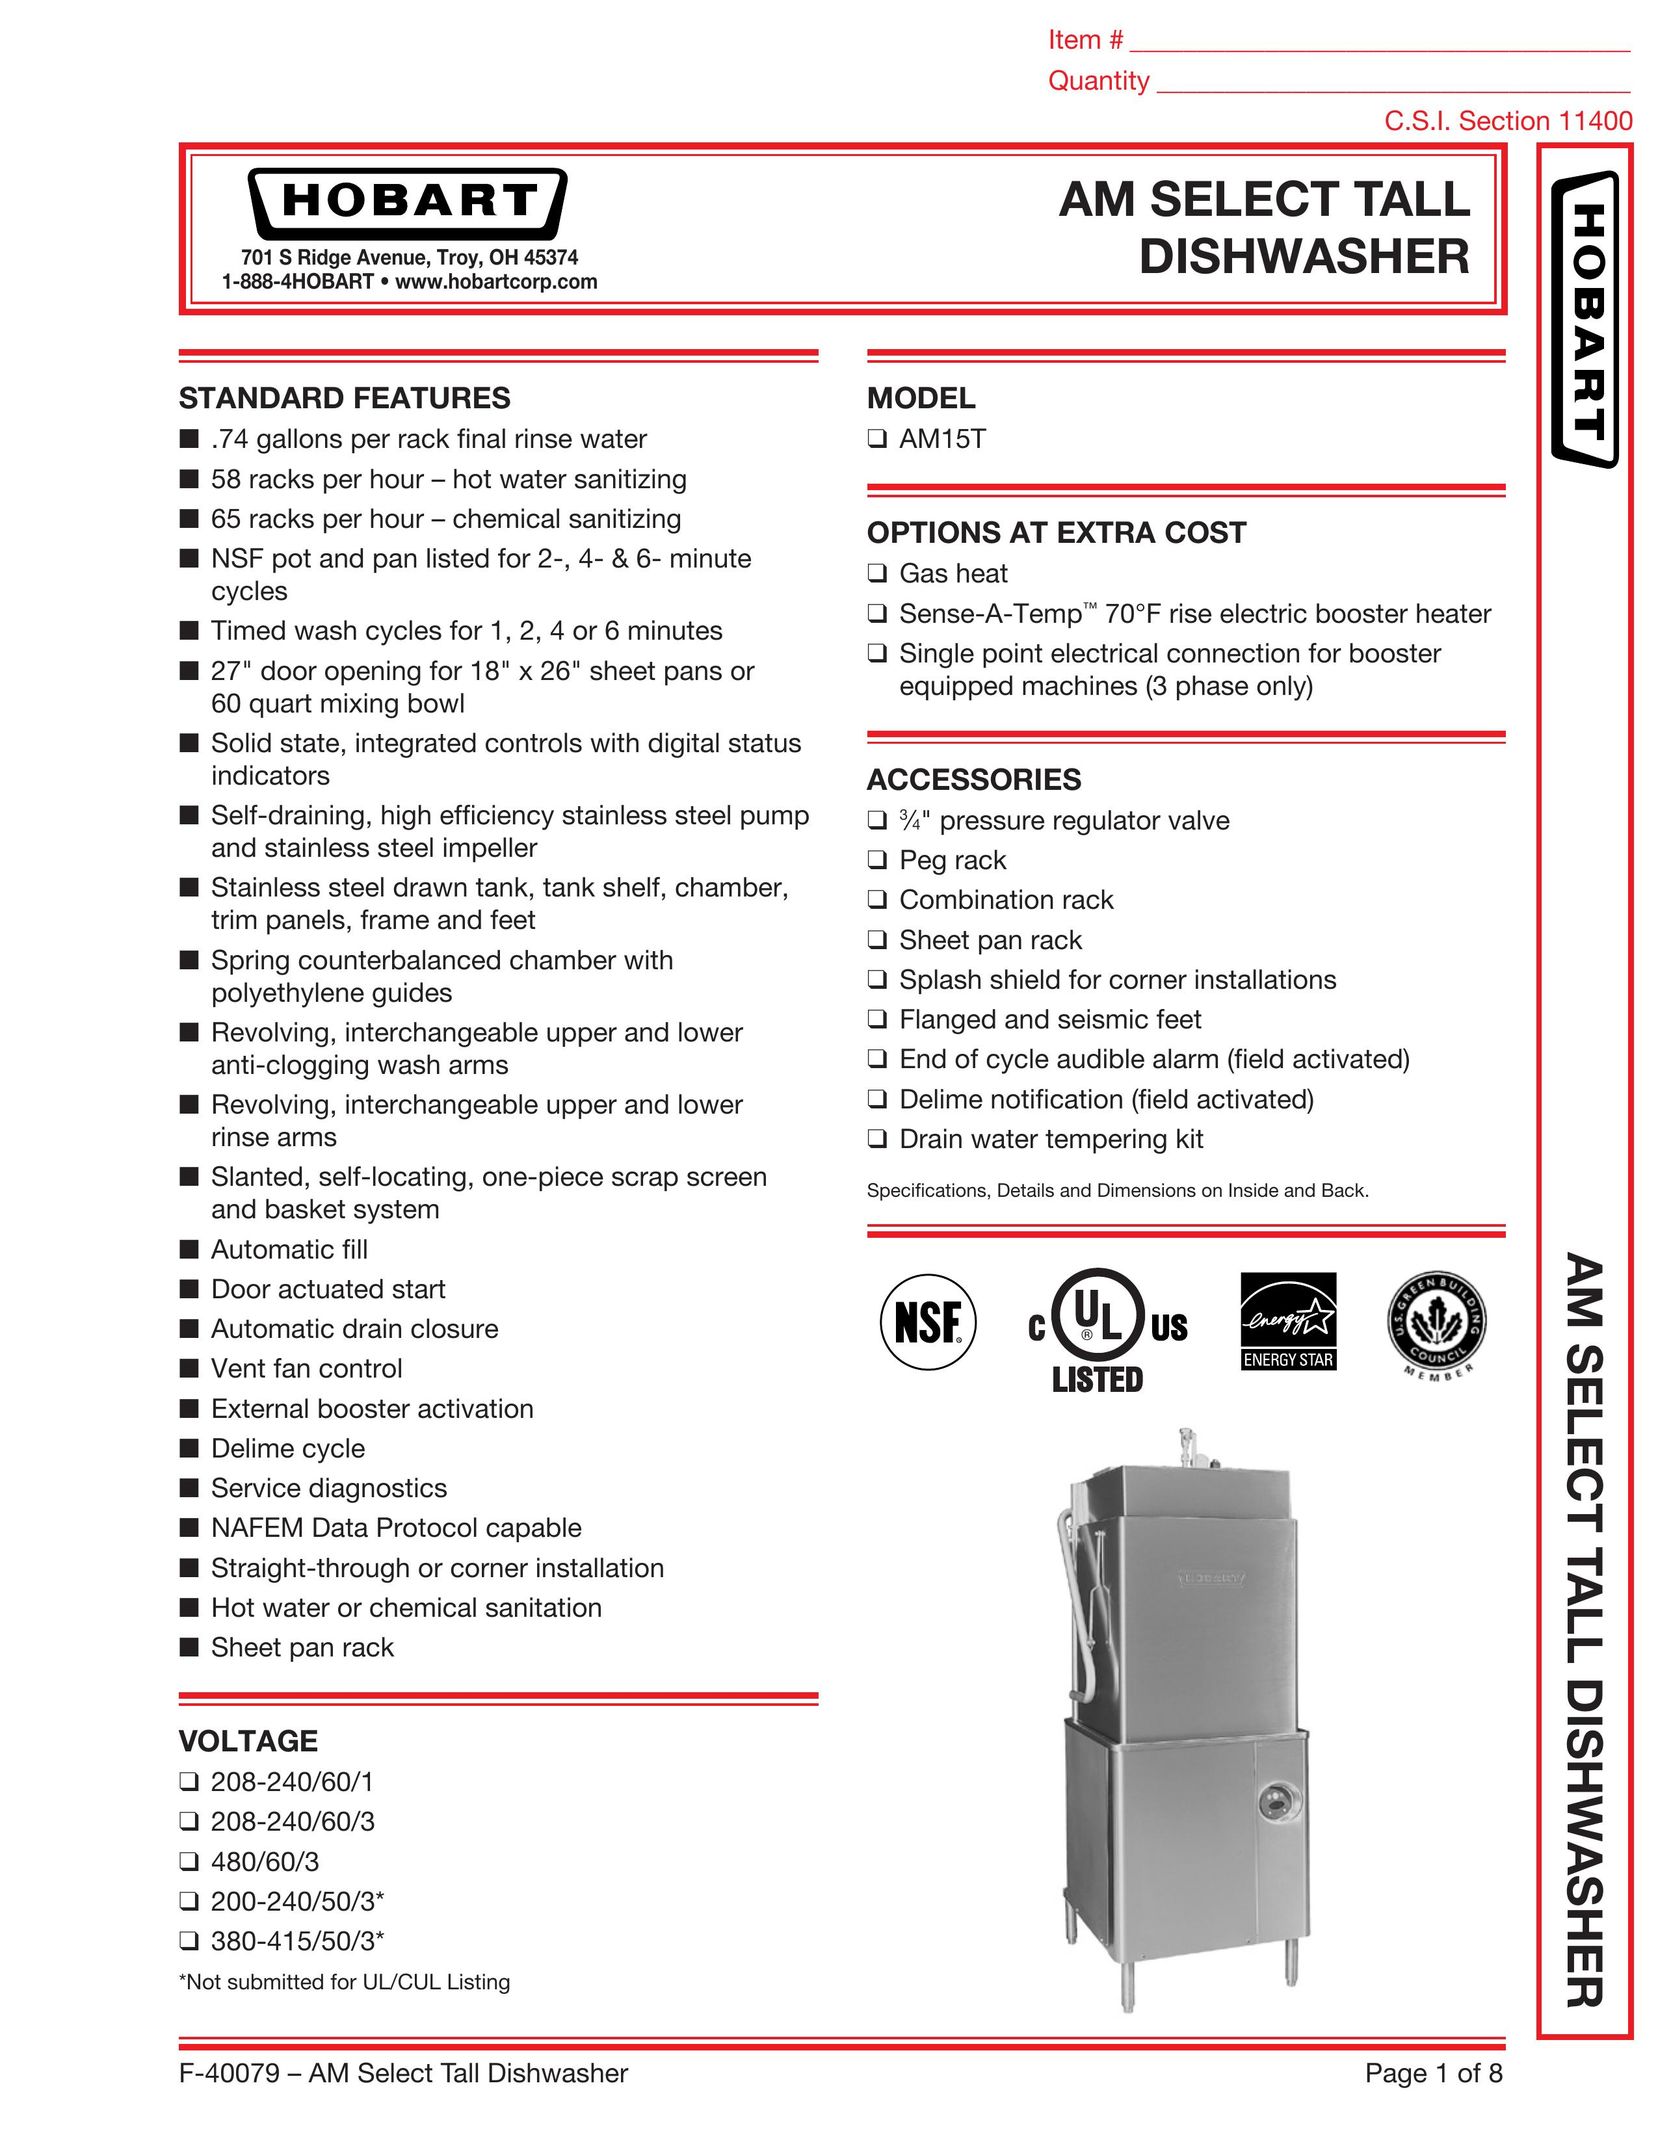 Hobart 208-240/60/3 Dishwasher User Manual